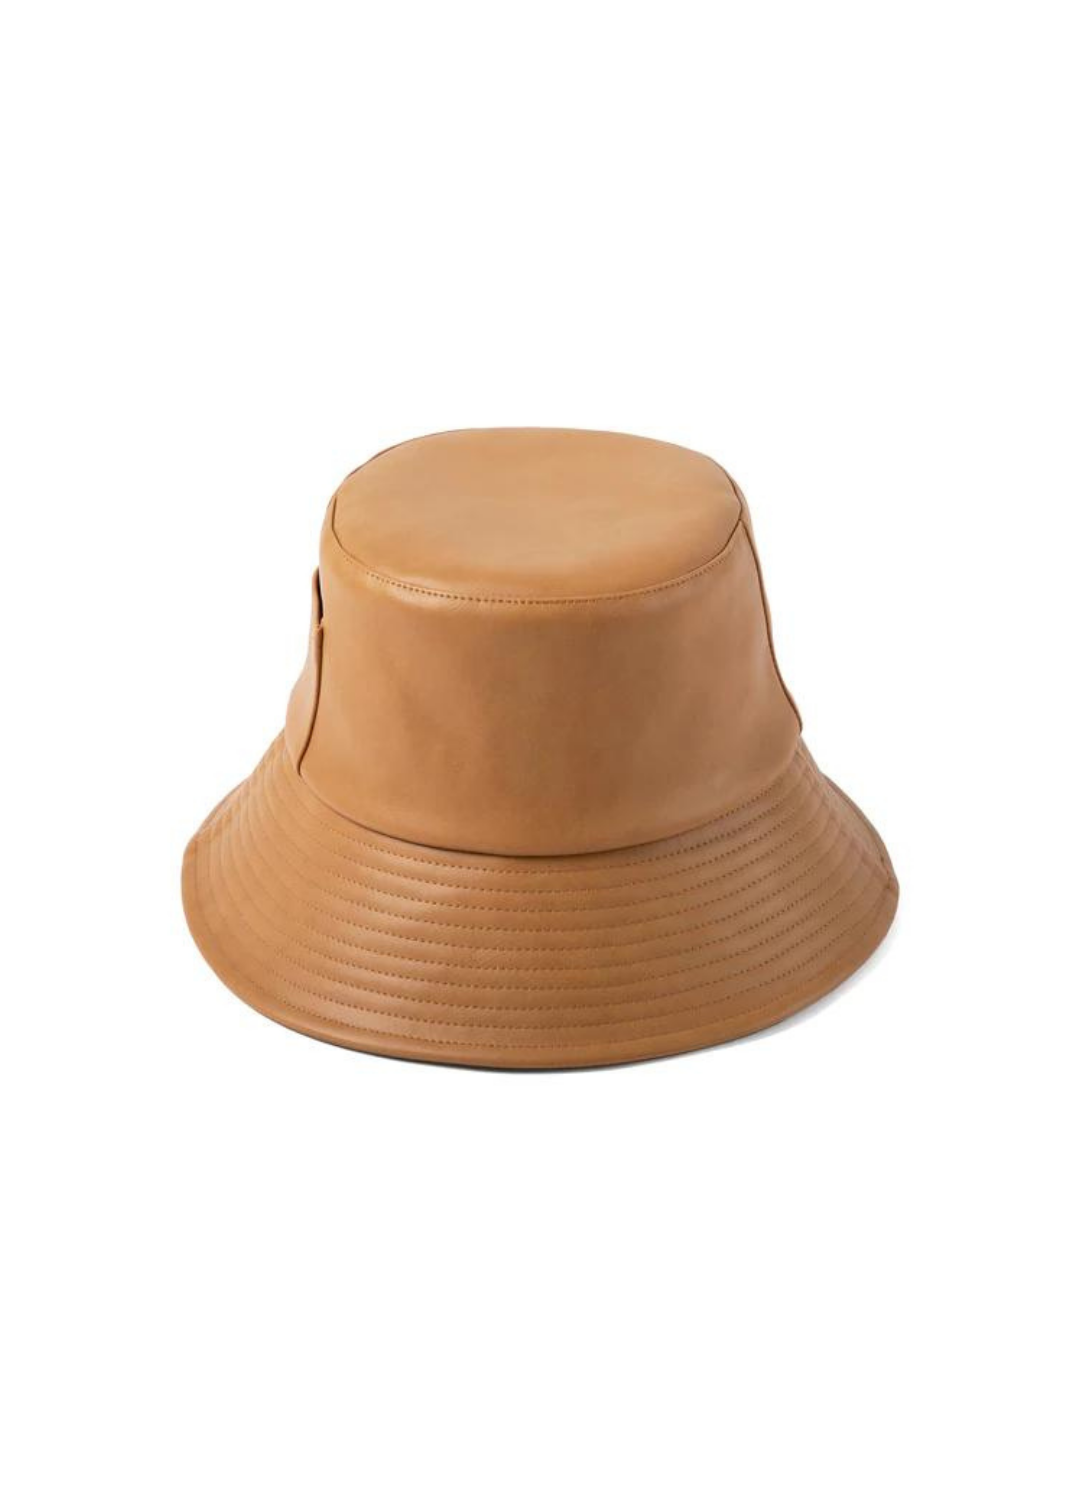 The Wave Bucket in Tan Vegan Leather